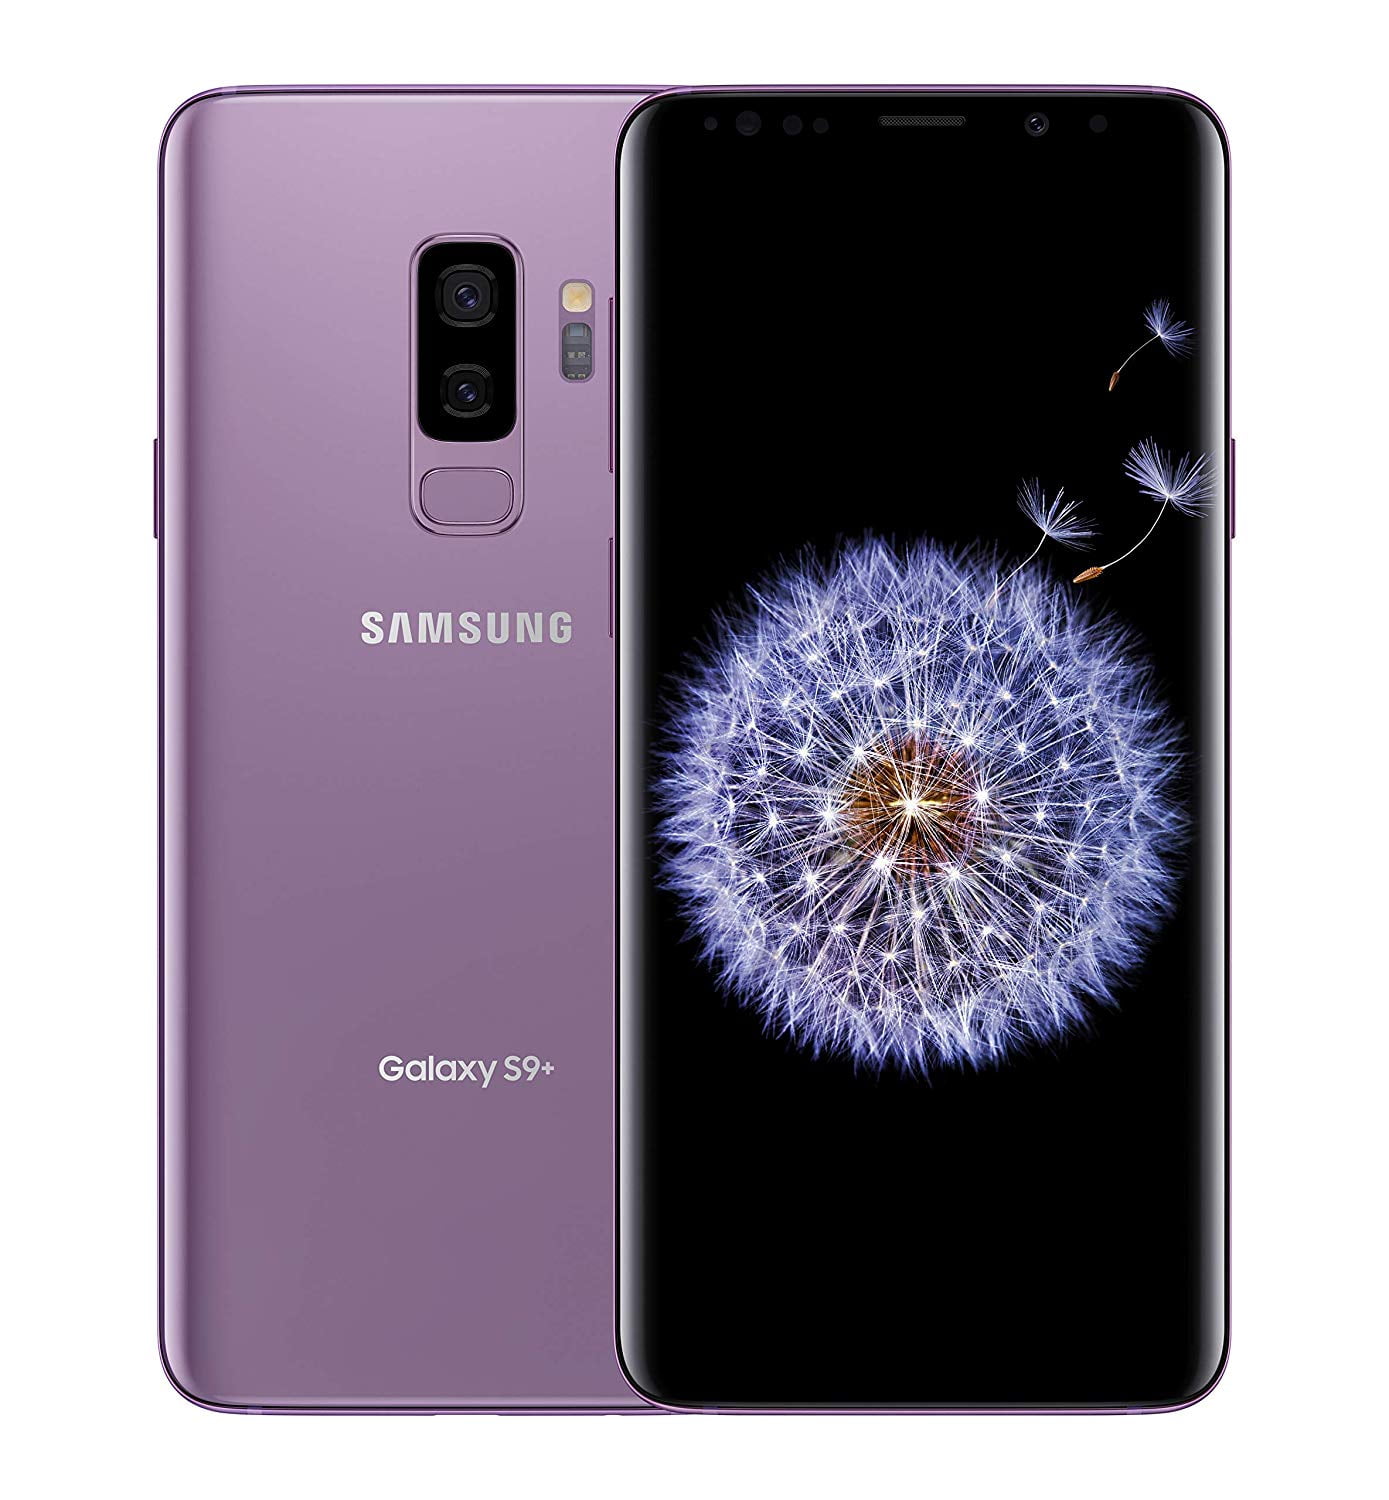 cansada mentiroso Finito Restored Samsung Galaxy S9 Plus SM-G965U 64GB Factory Unlocked Android  Smartphone (Refurbished) - Walmart.com